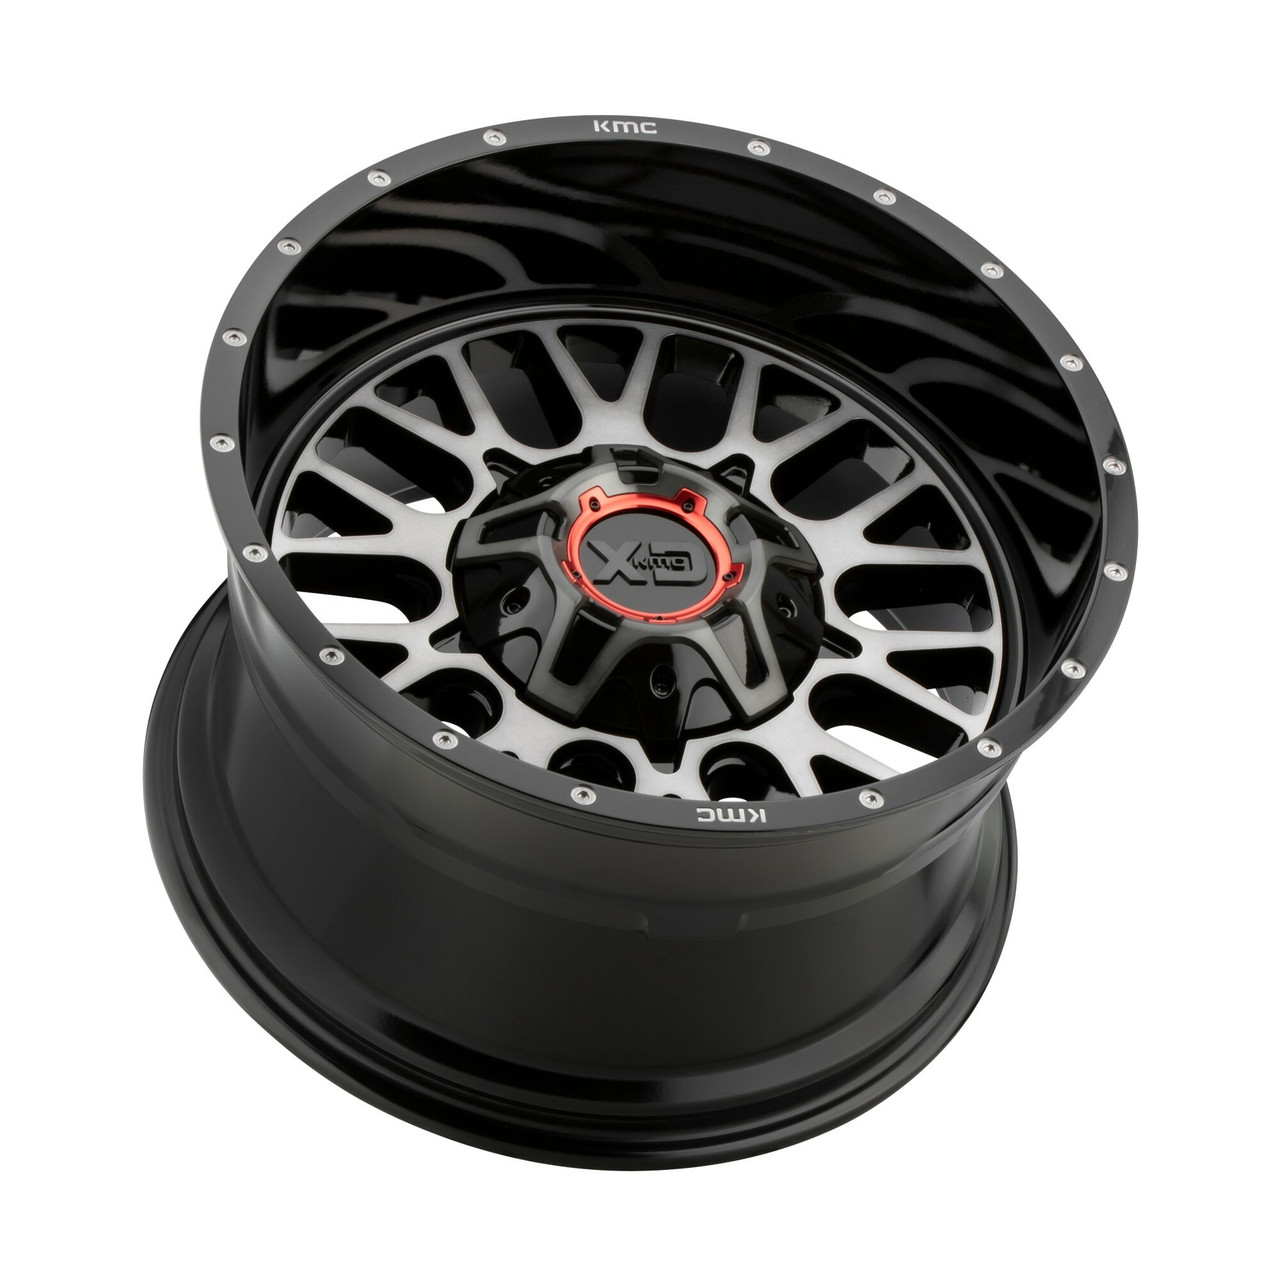 XD XD842 Snare 20x10 5x5 5x5.5 Gloss Black Gray Tint Wheel 20" -18mm Rim